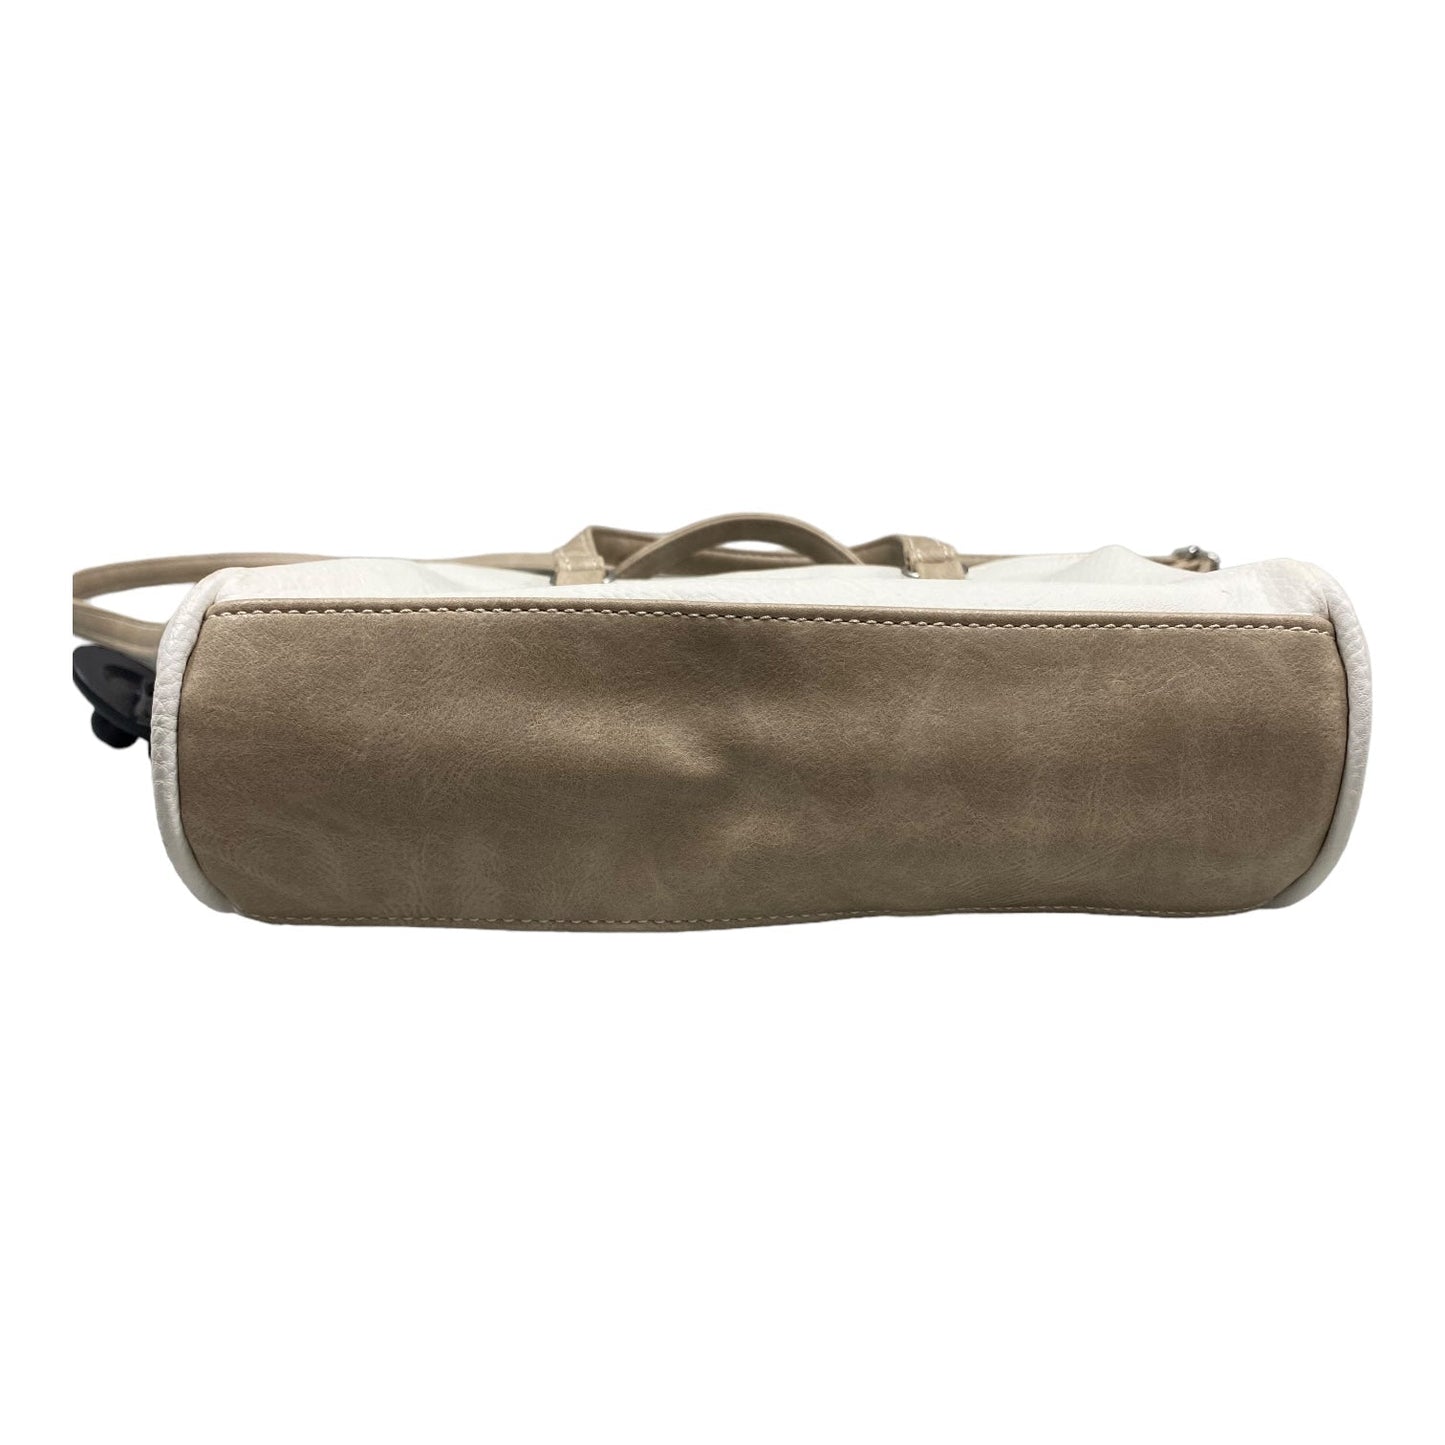 Handbag Leather MULTISAC, Size Small